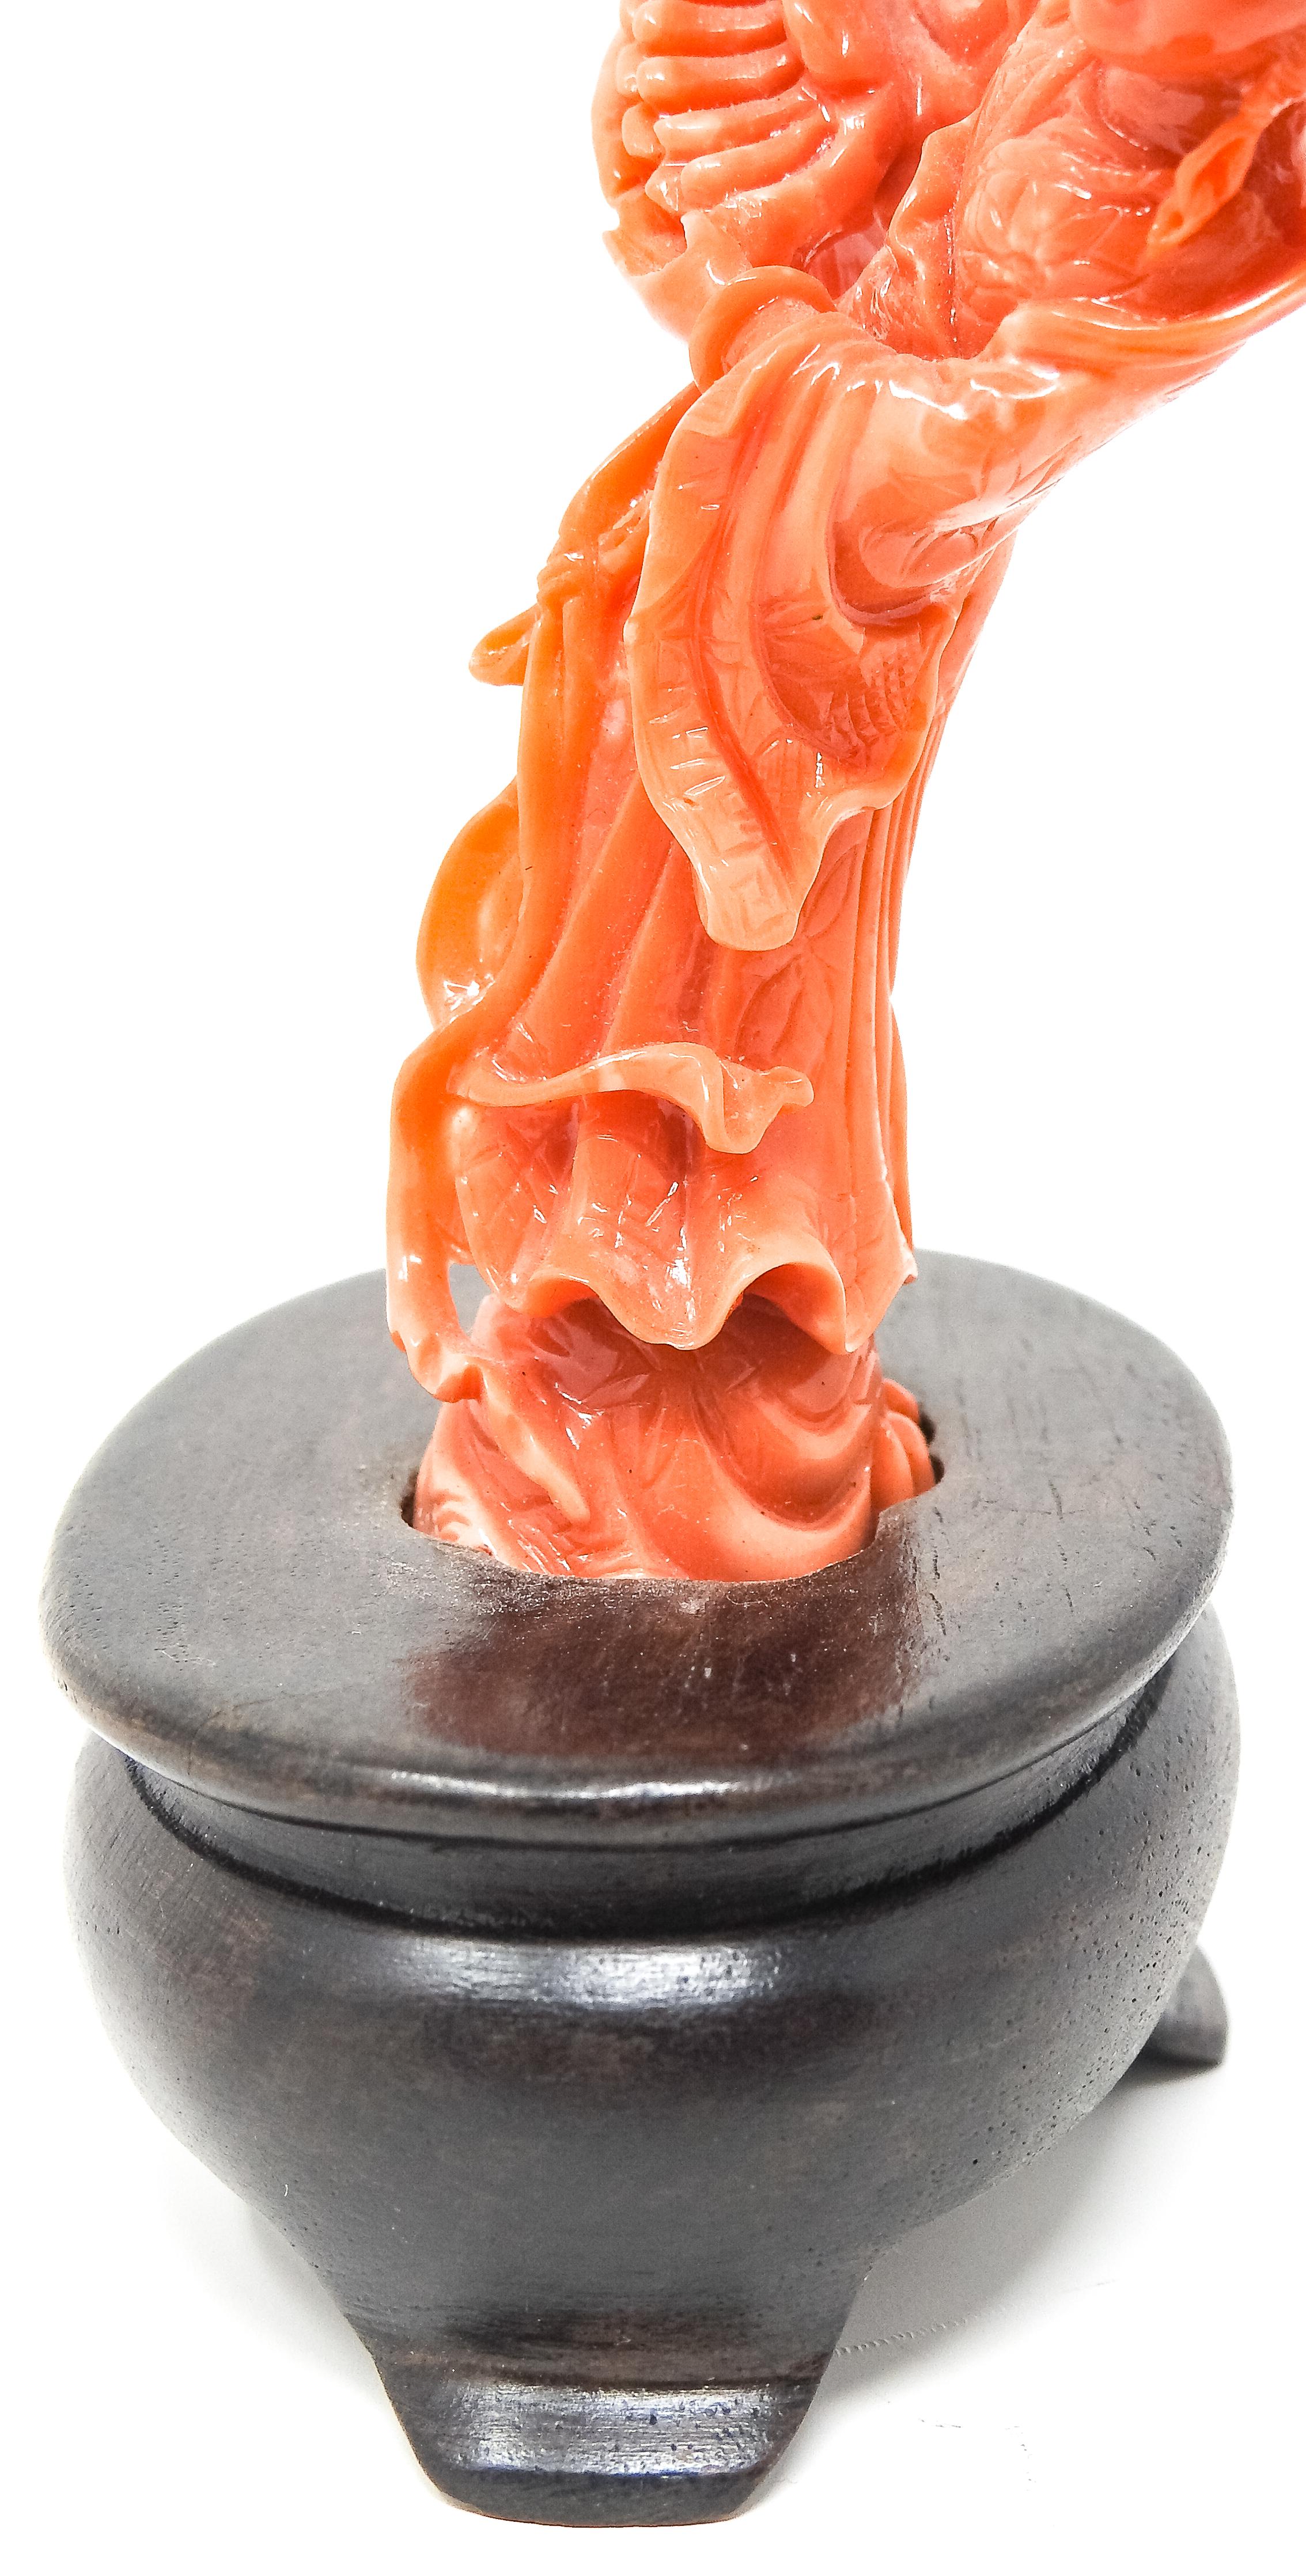 Coral Geisha Figure on Wooden Base 8